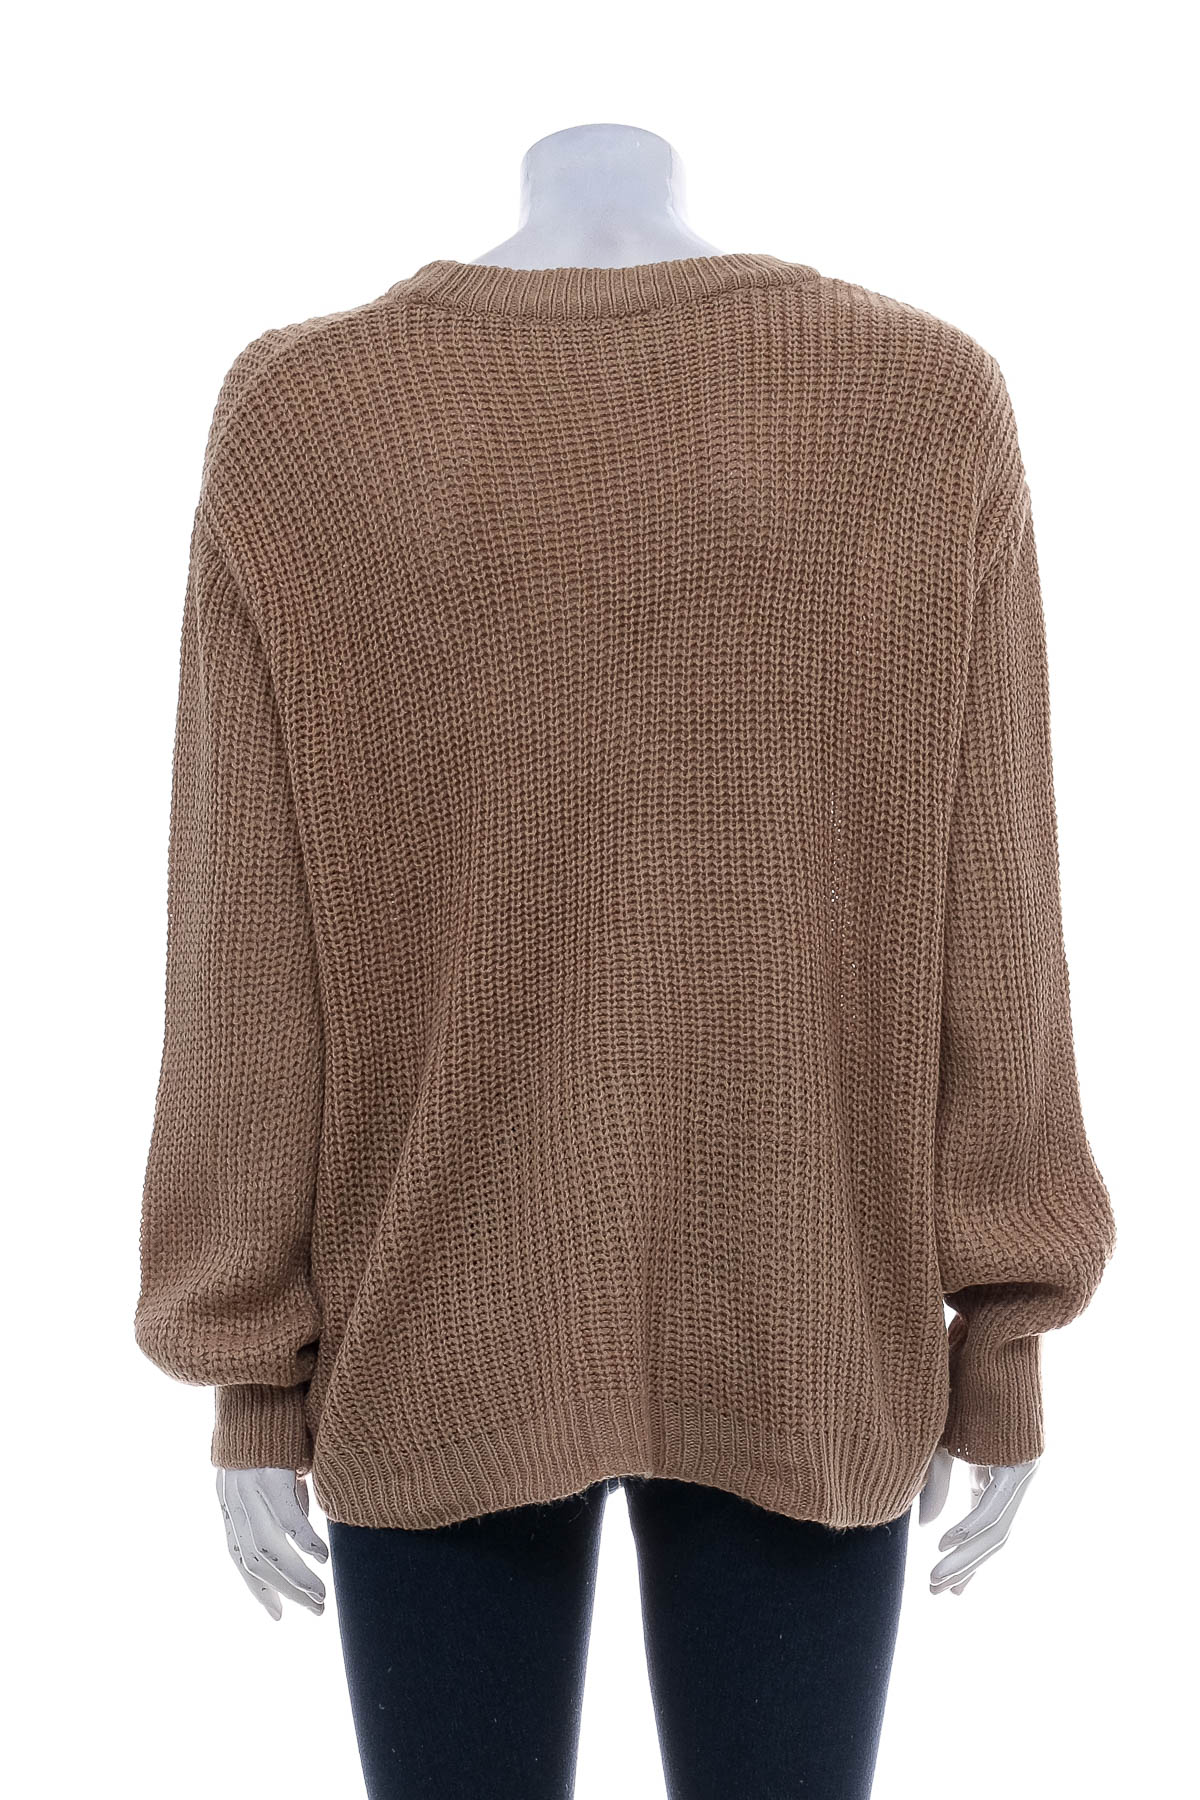 Women's sweater - Anko - 1